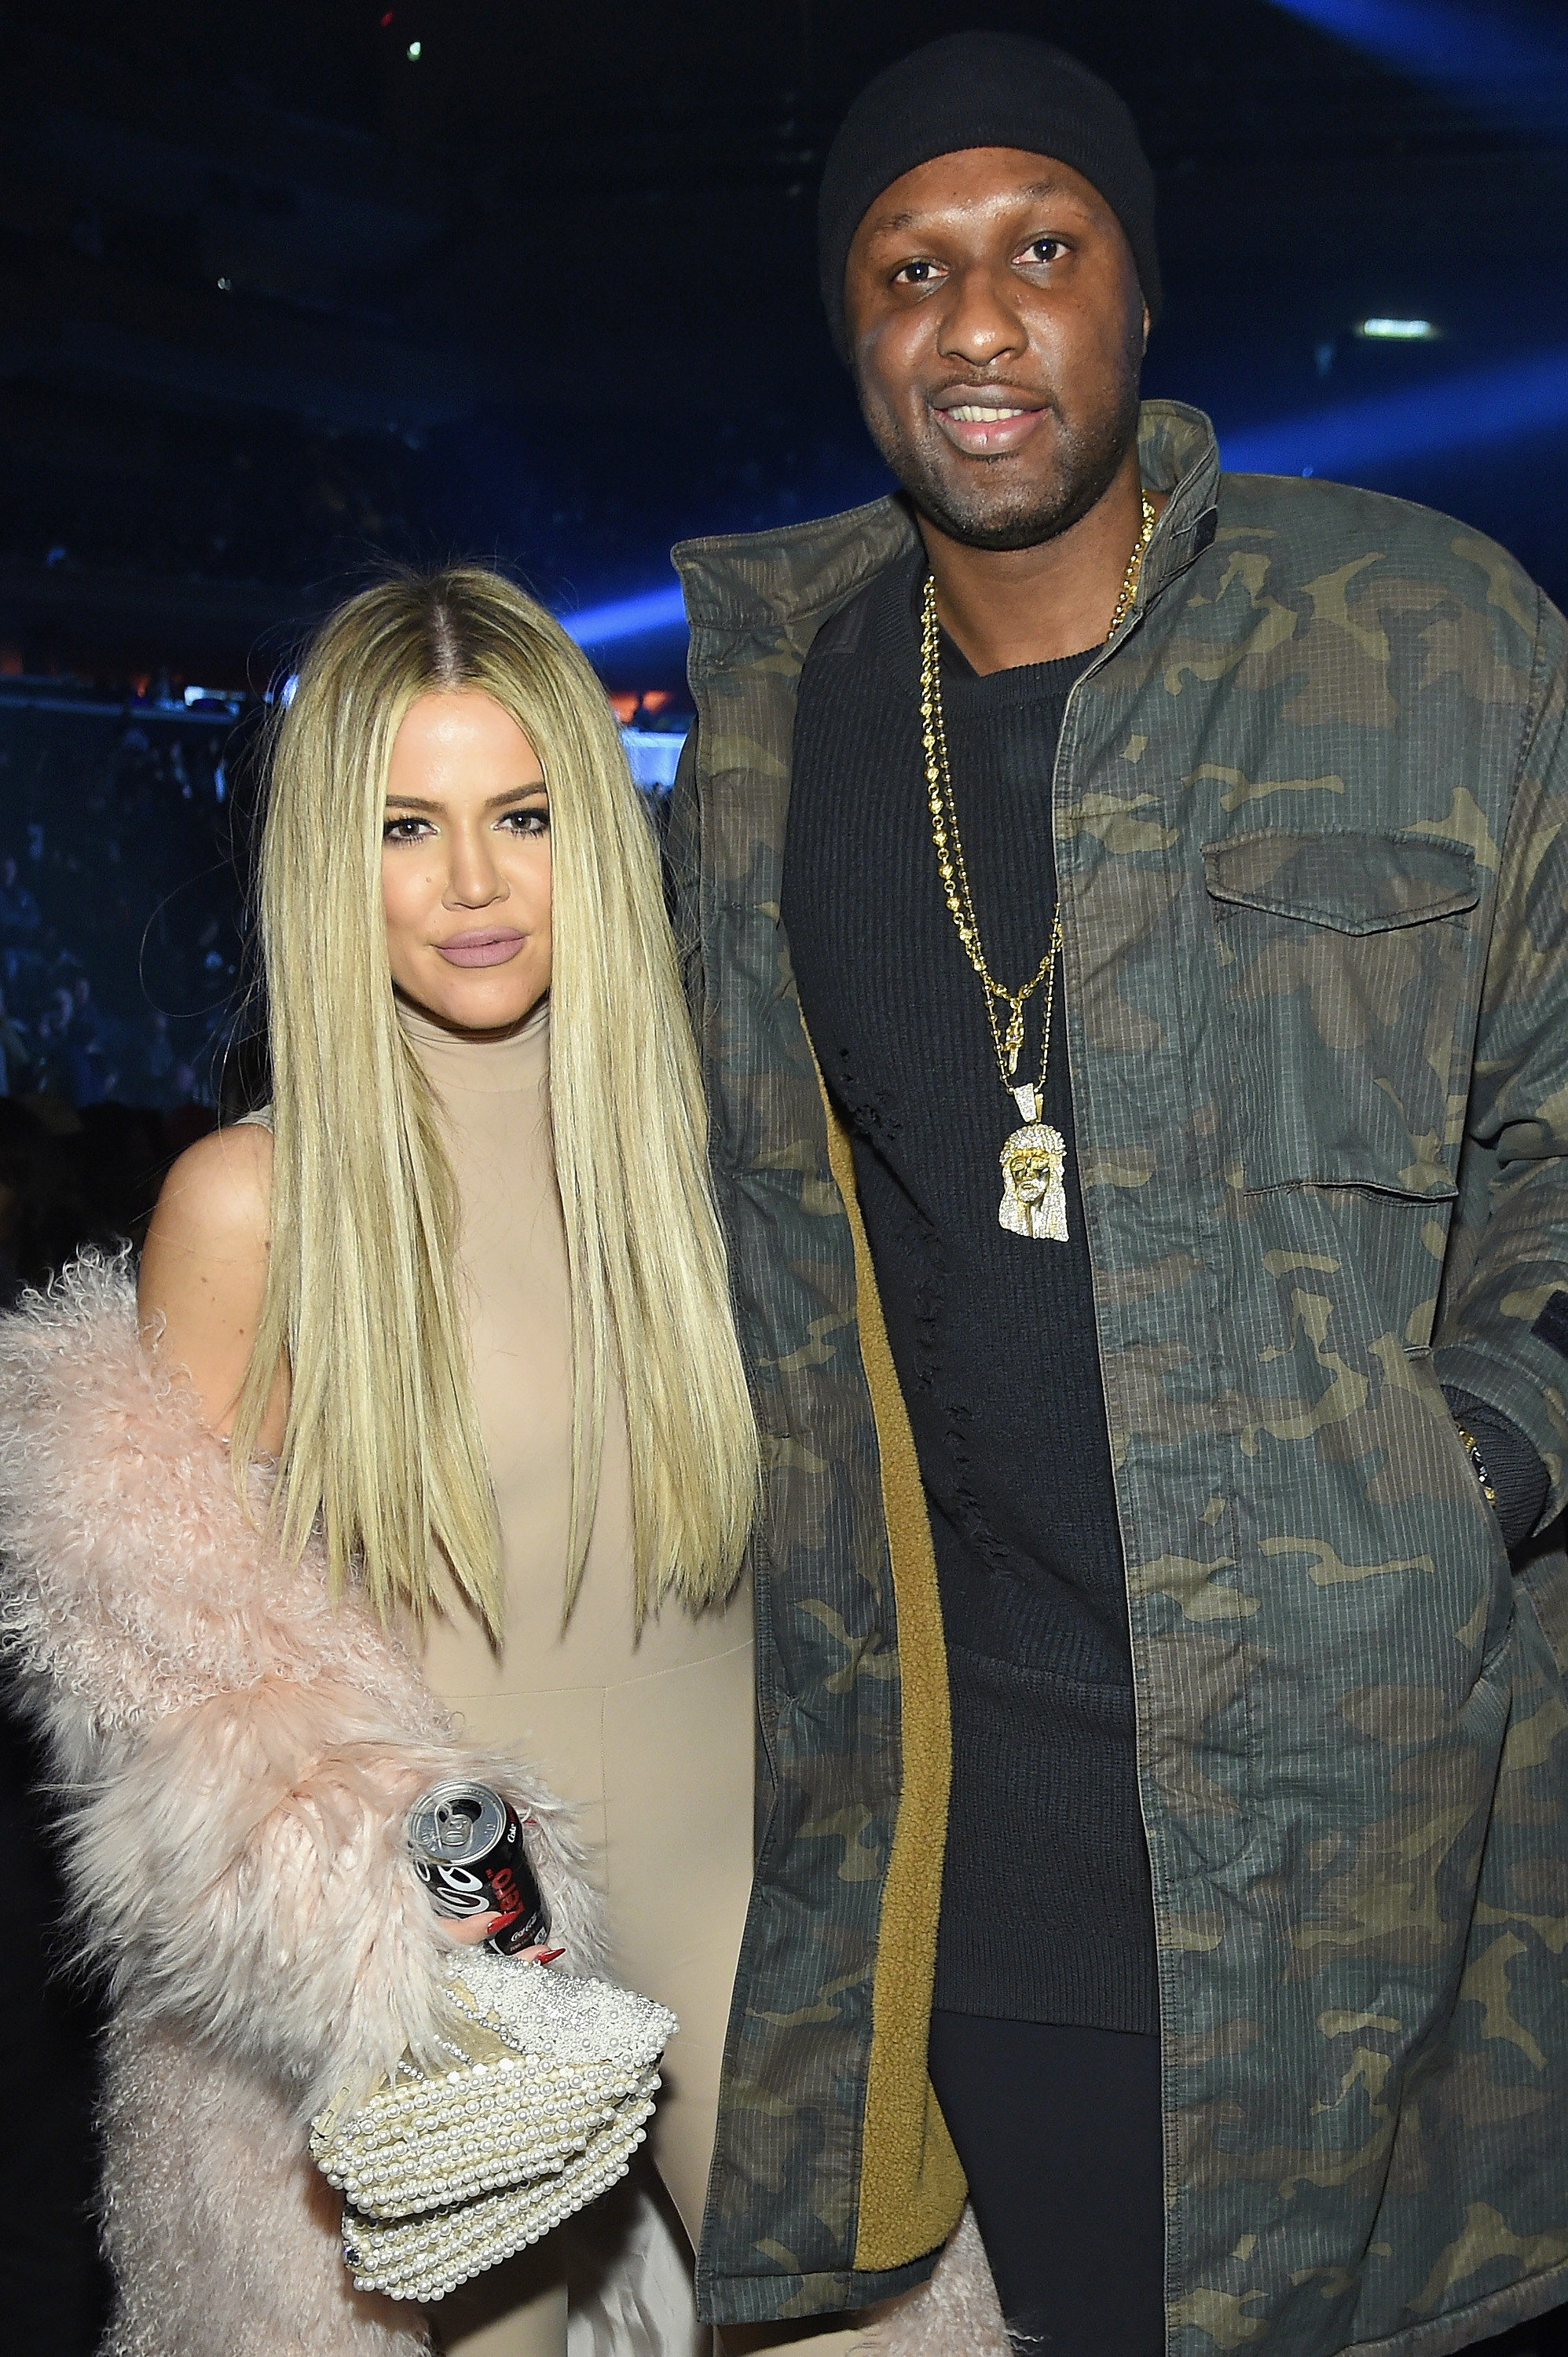 Khloe Kardashian and Lamar Odom attend Kanye West Yeezy Season 3 on February 11, 2016 in New York City